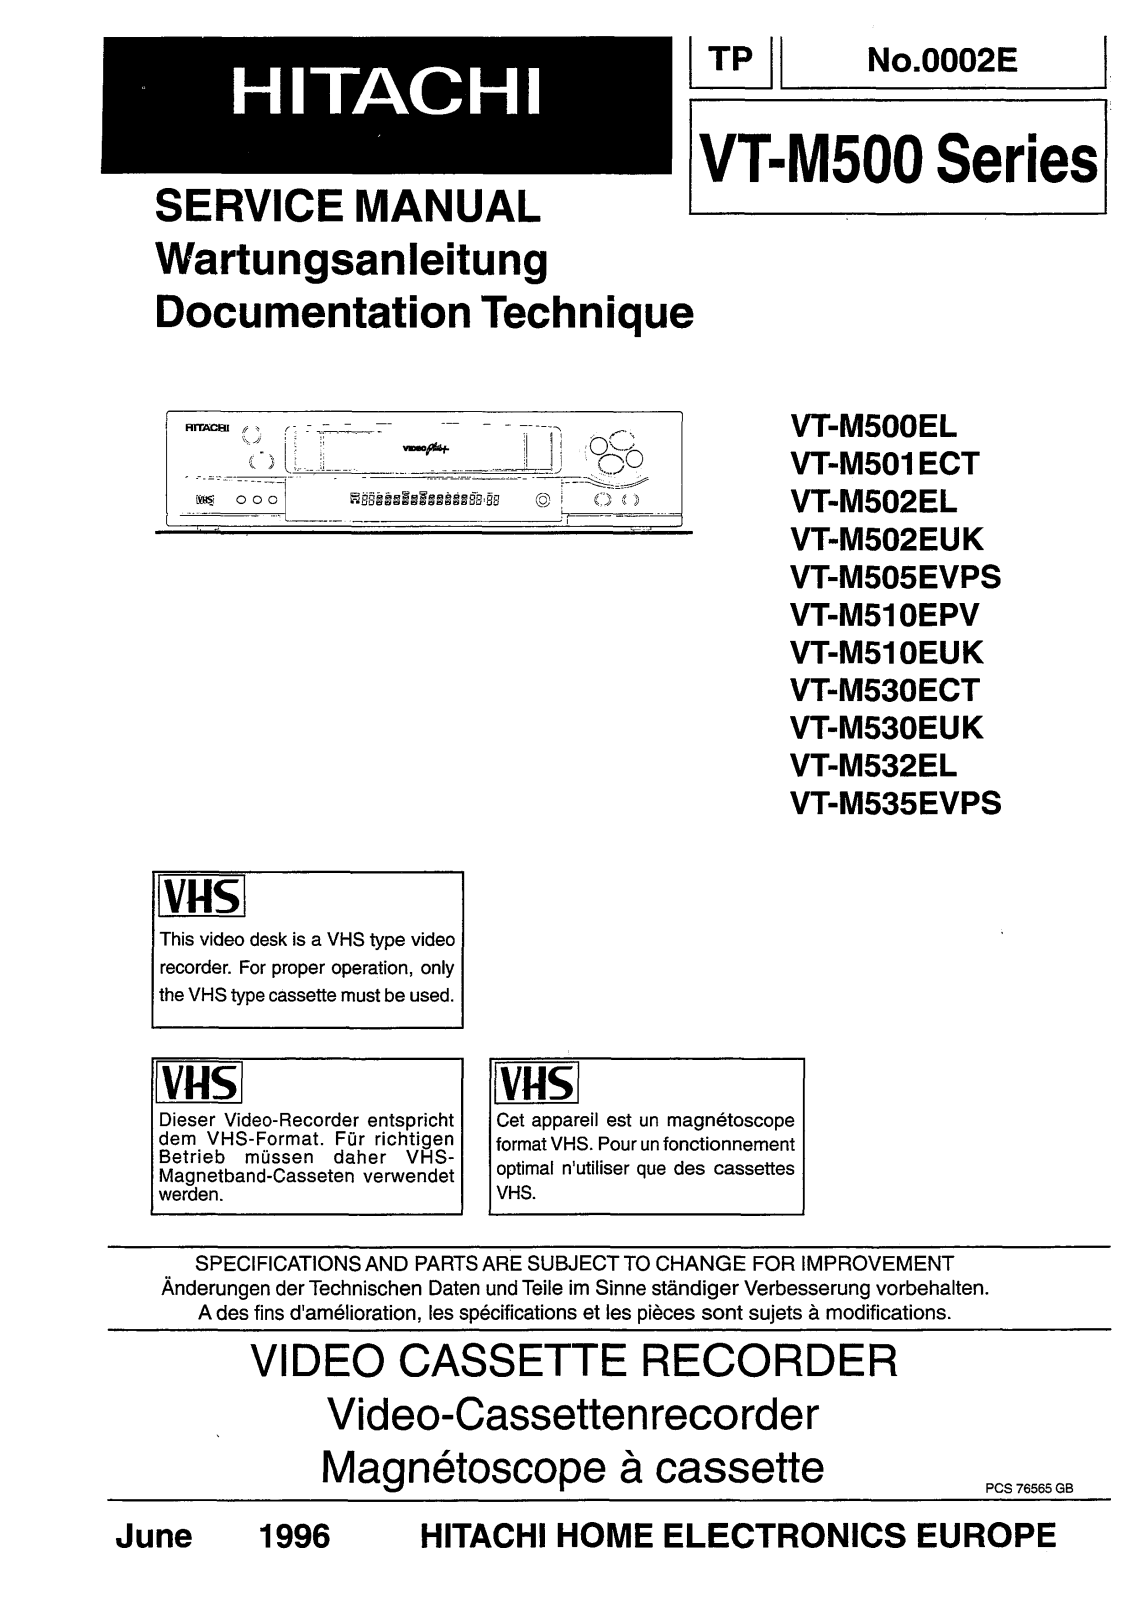 Hitachi VT-M535EVPS, VT-M532EL, VT-M530EUK, VT-M530ECT, VT-M510EUK Service Manual